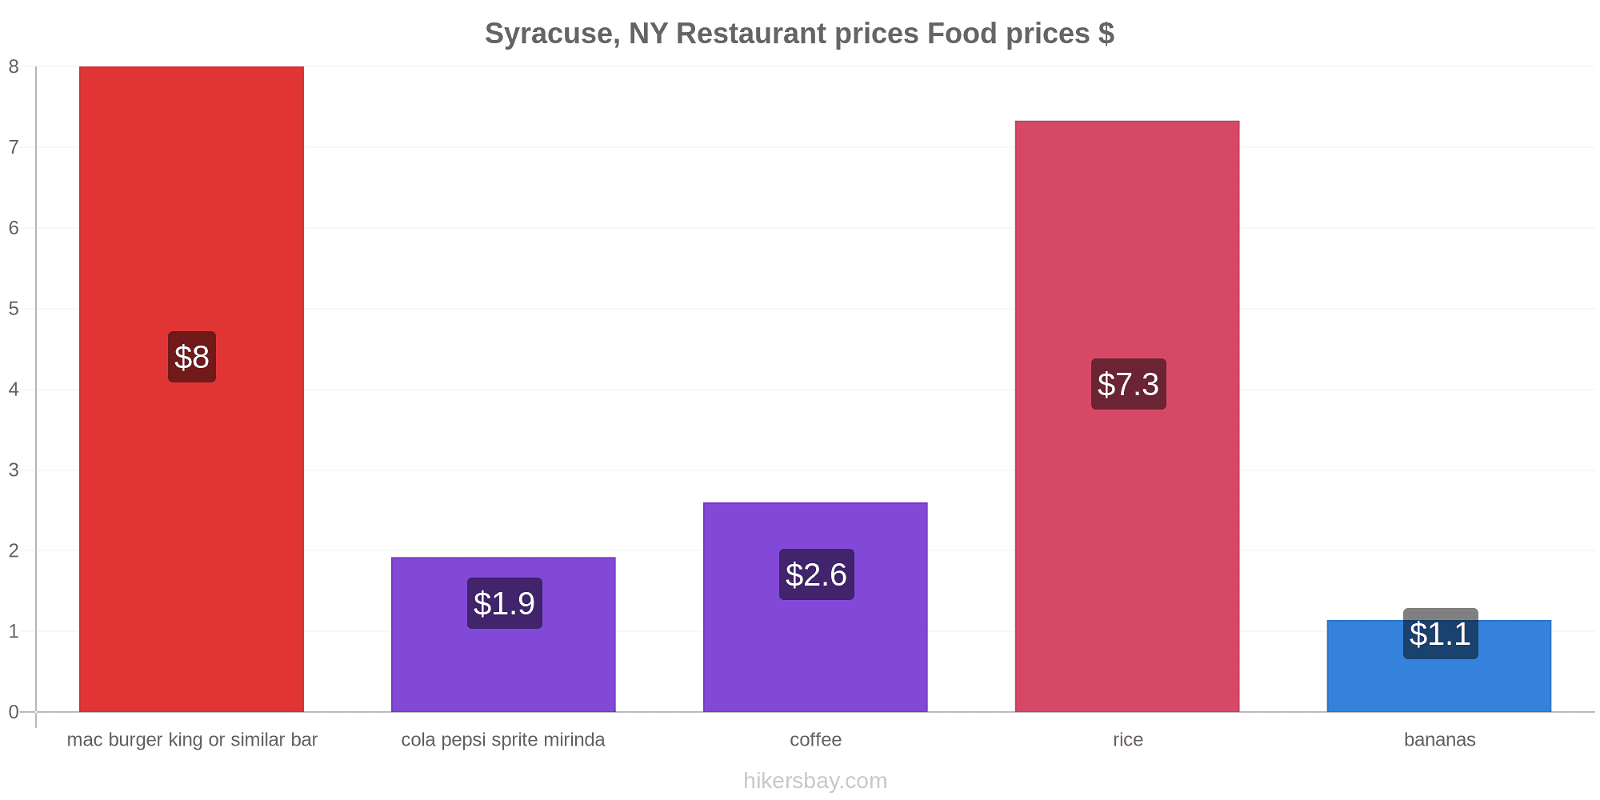 Syracuse, NY price changes hikersbay.com